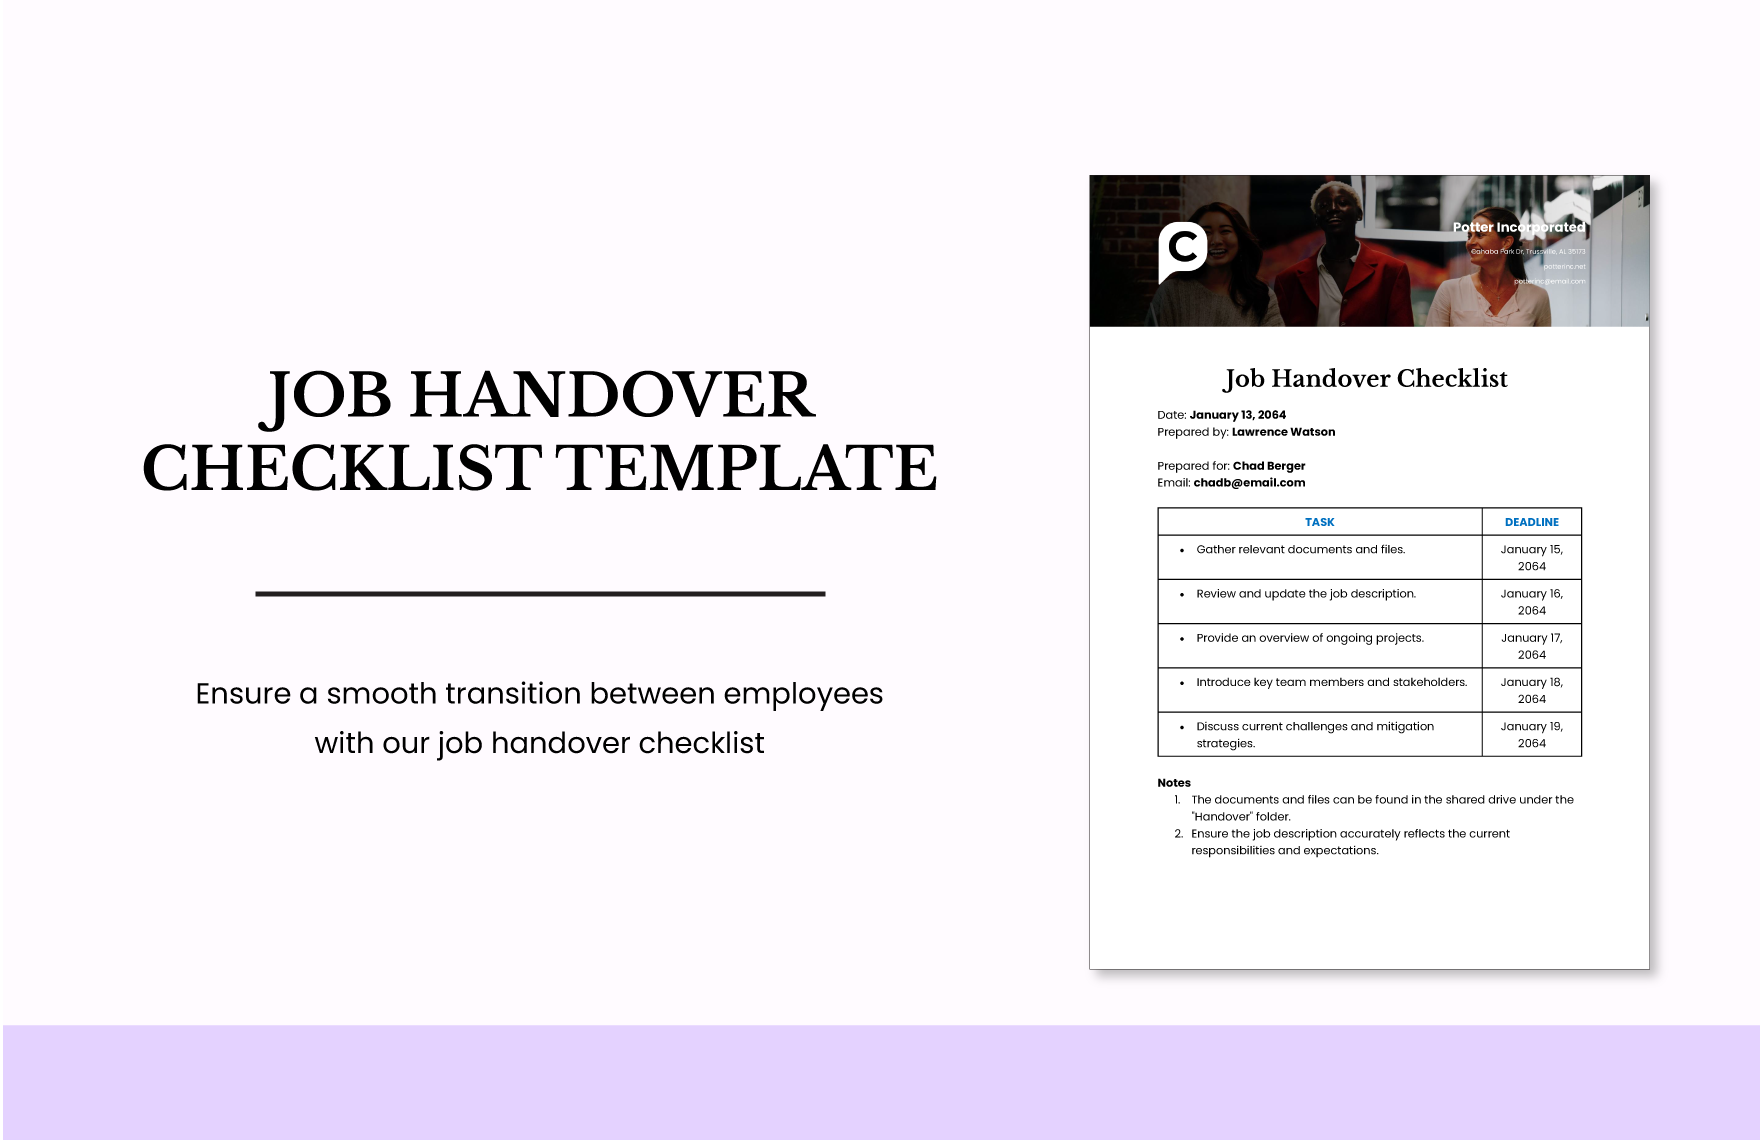 Job Handover Checklist Template